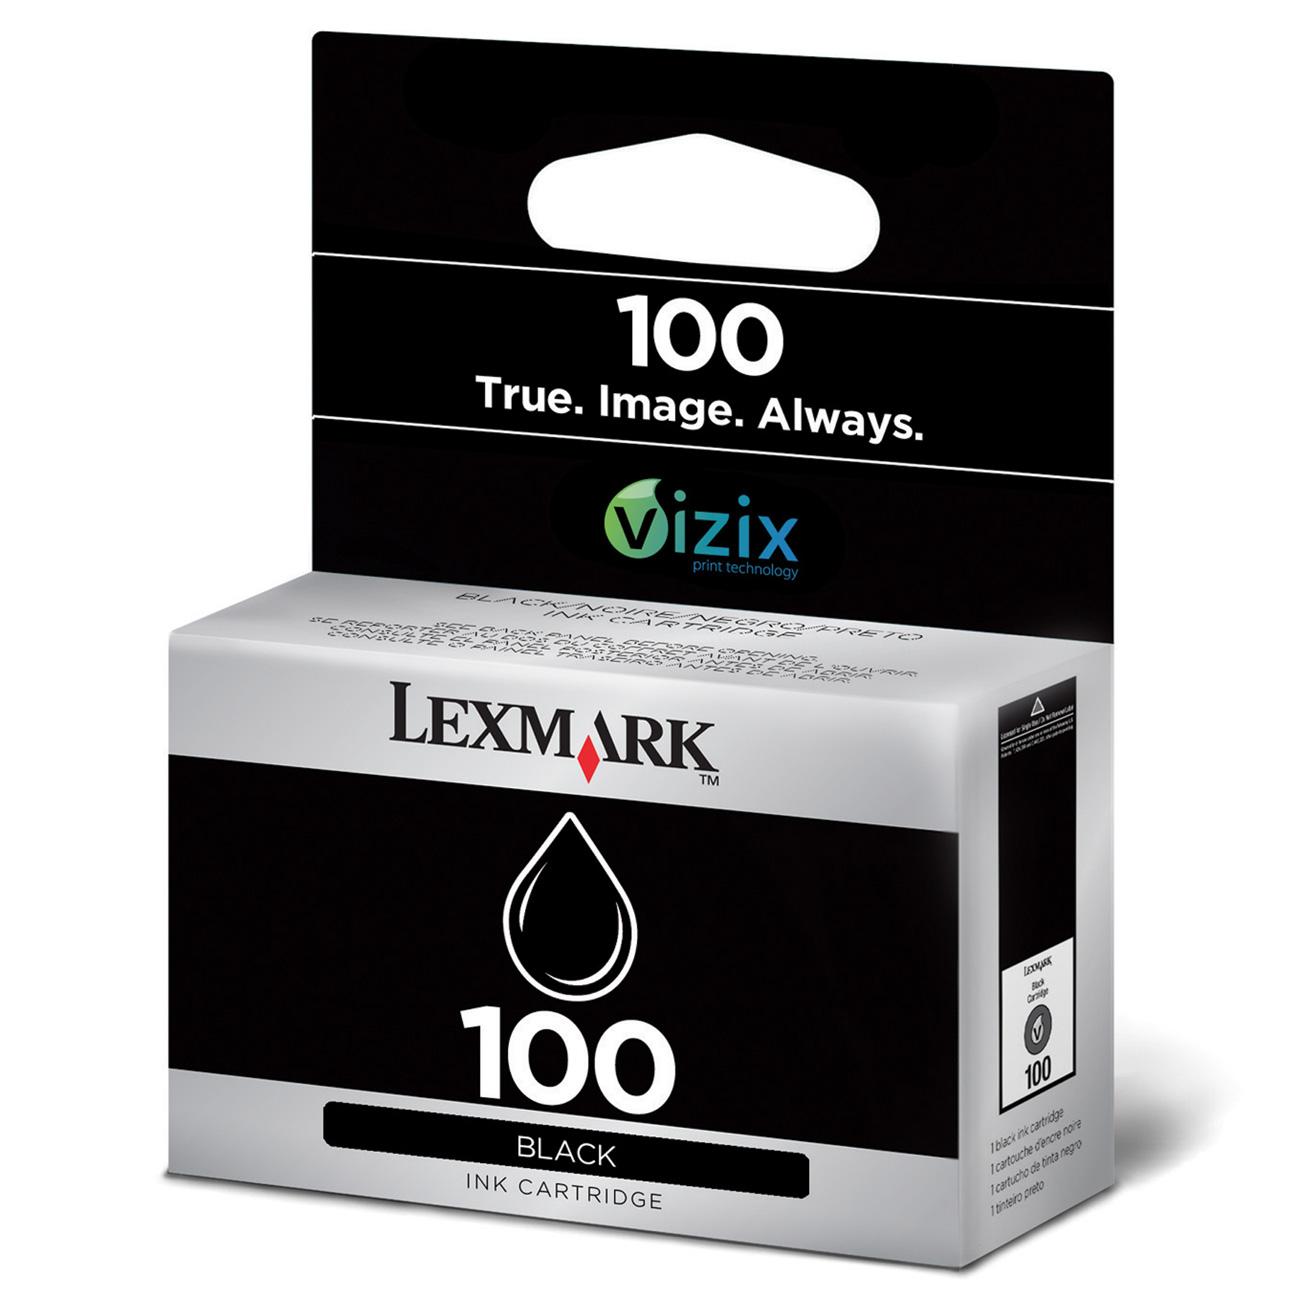 Lexmark 14N0901 100 Magenta Return Program Ink Cartridge for S305, S405, S505, S605, S815, Pro205, Pro705